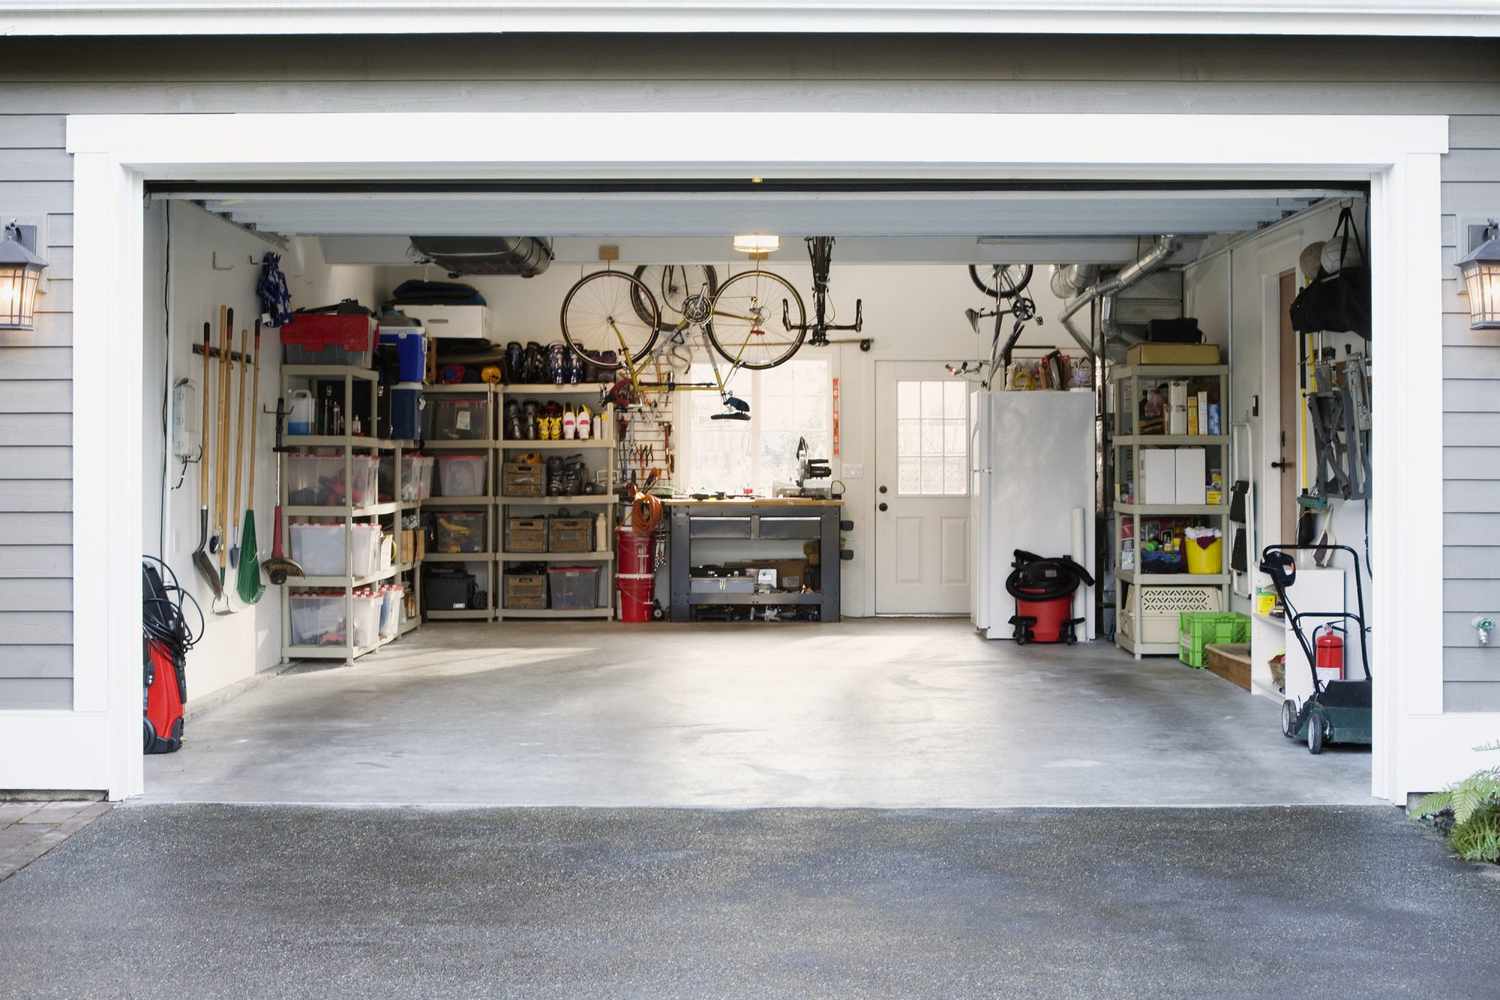 Organized garage with storage bins and bikes